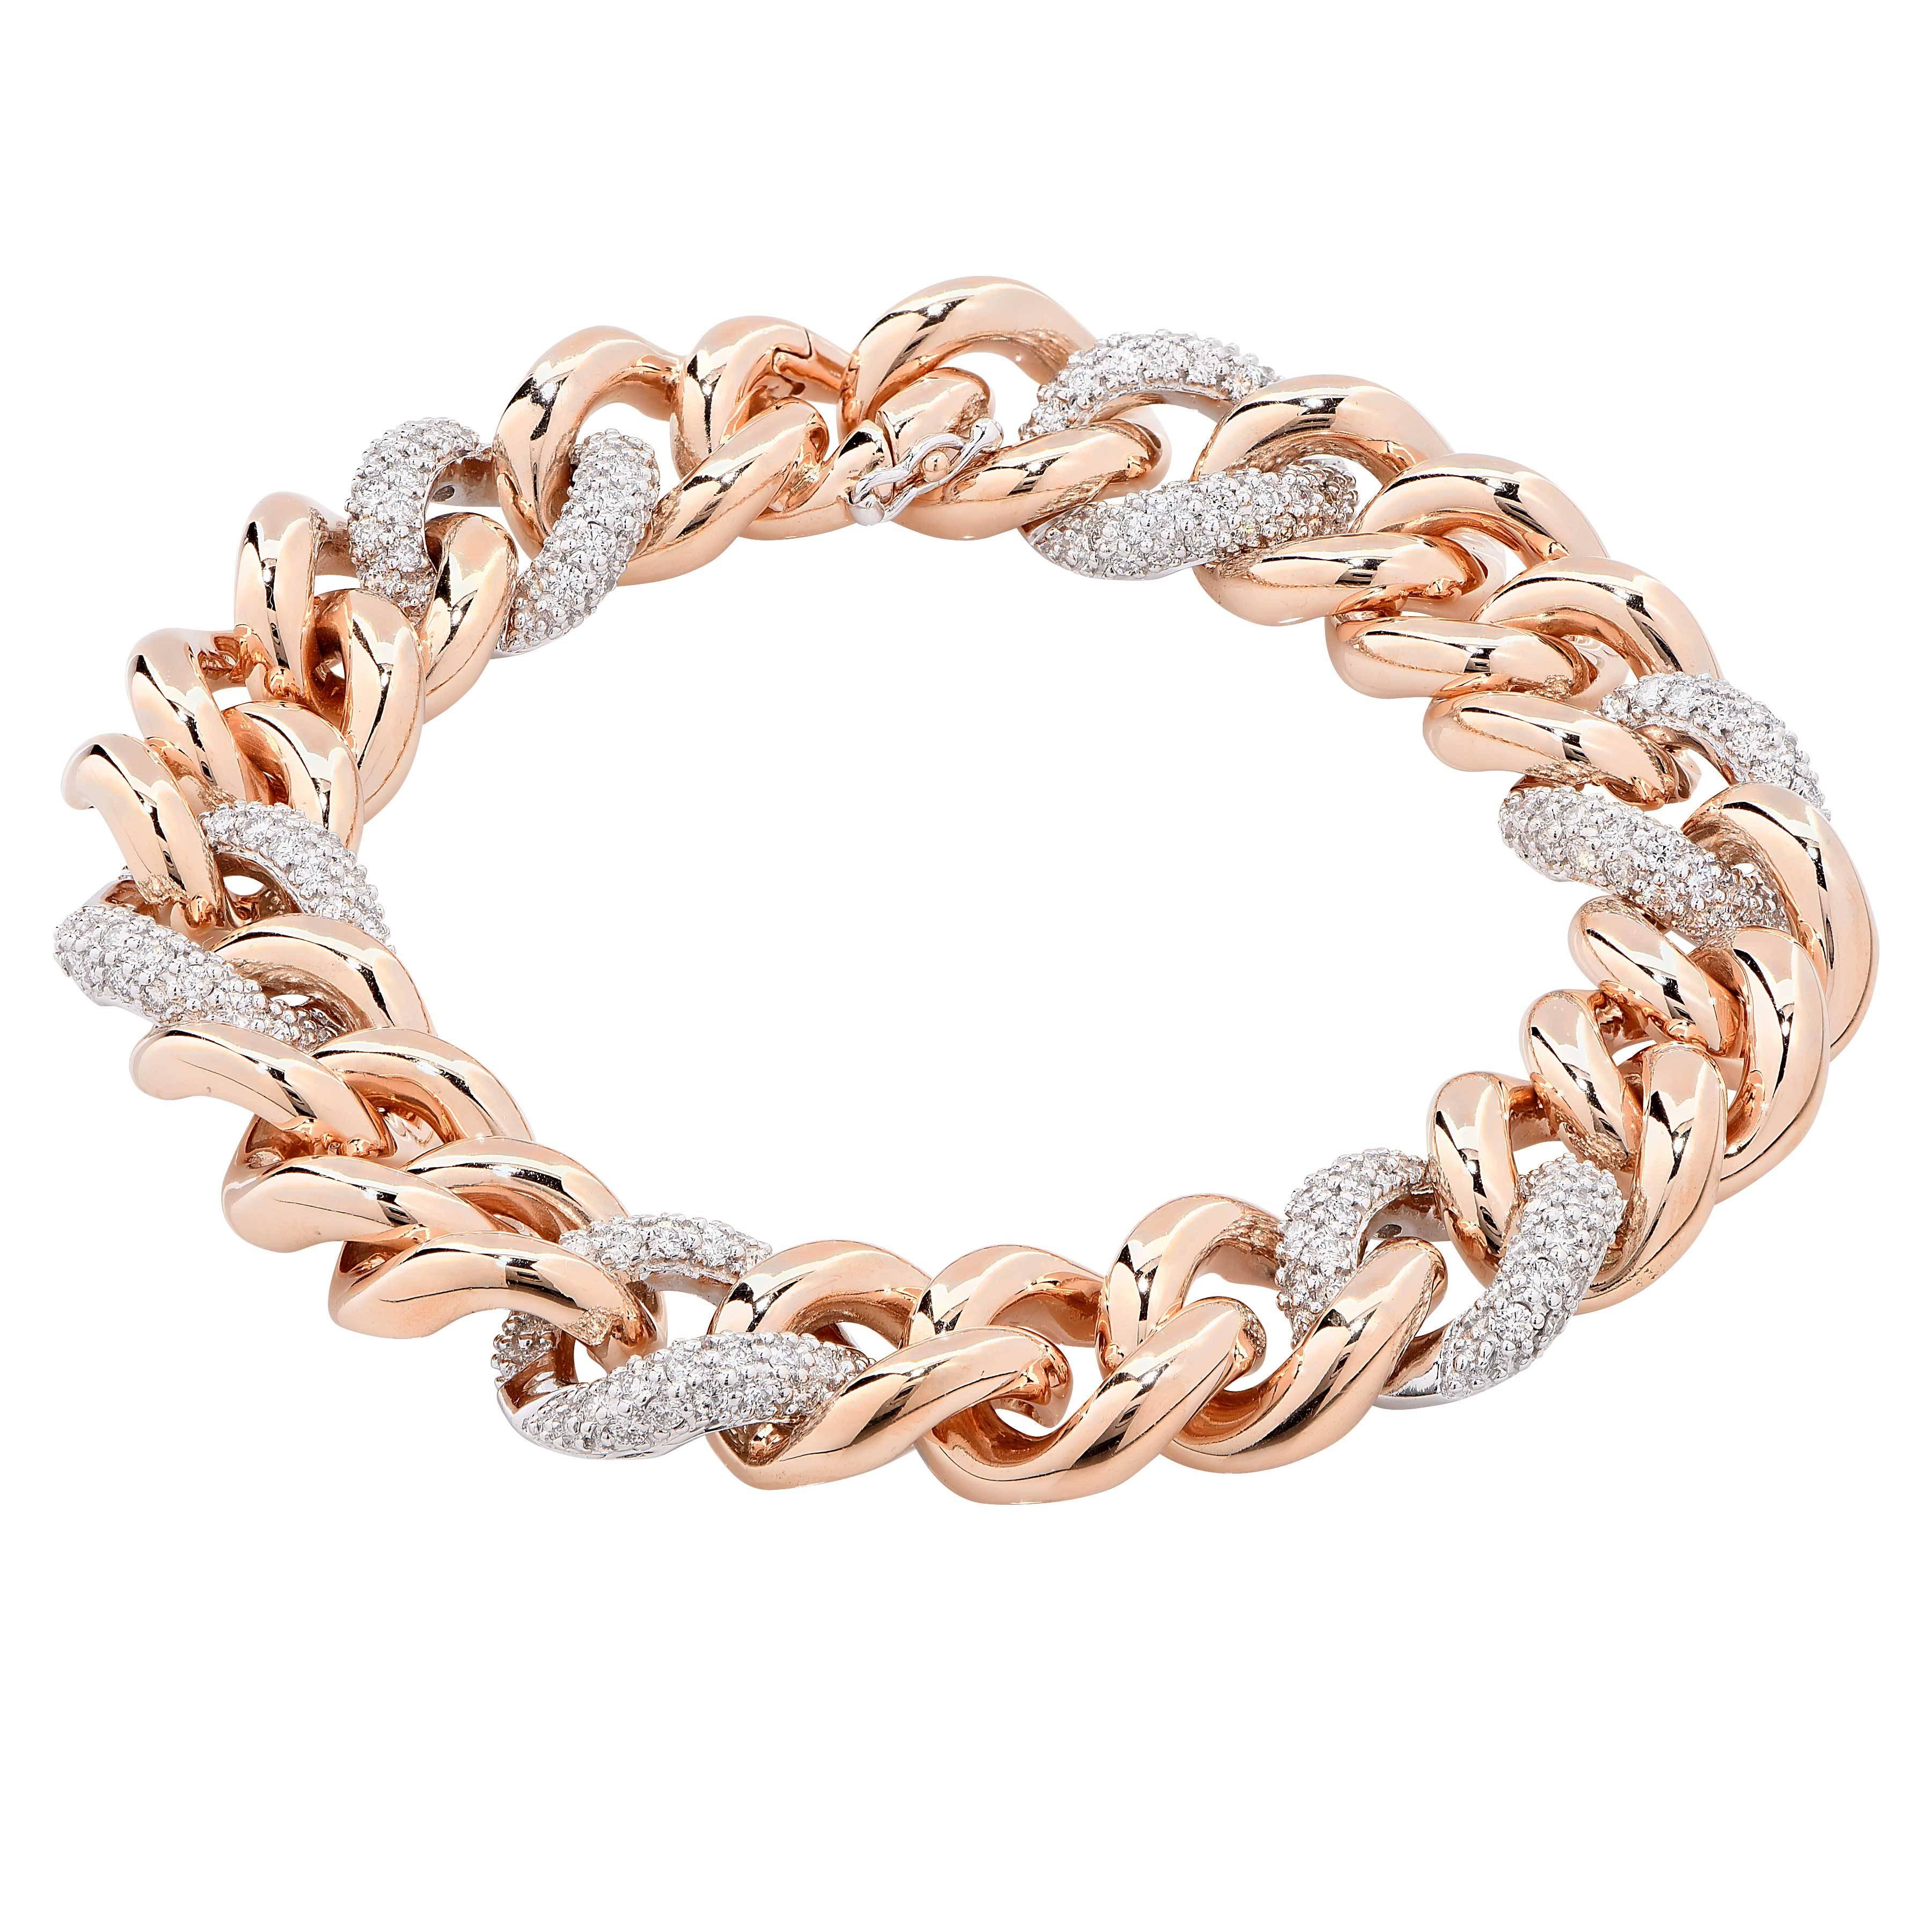 Rina Limor 1.15 Carat Diamond Rose Gold Italian Curb Link Bracelet